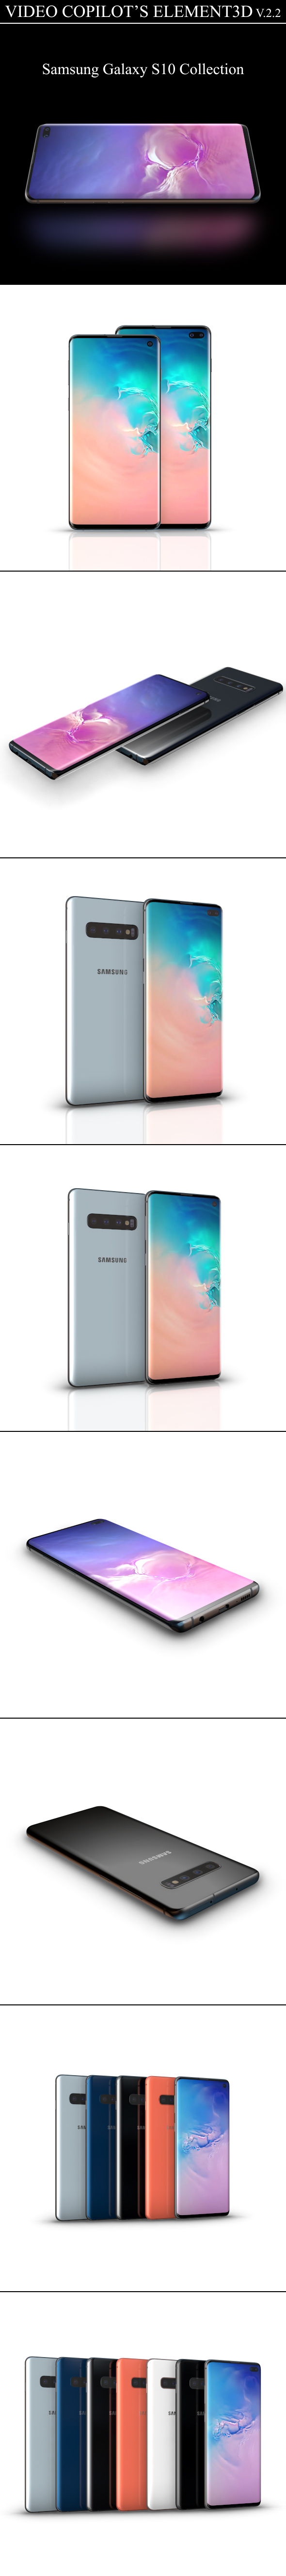 Element3D - Samsung - 3Docean 23369590